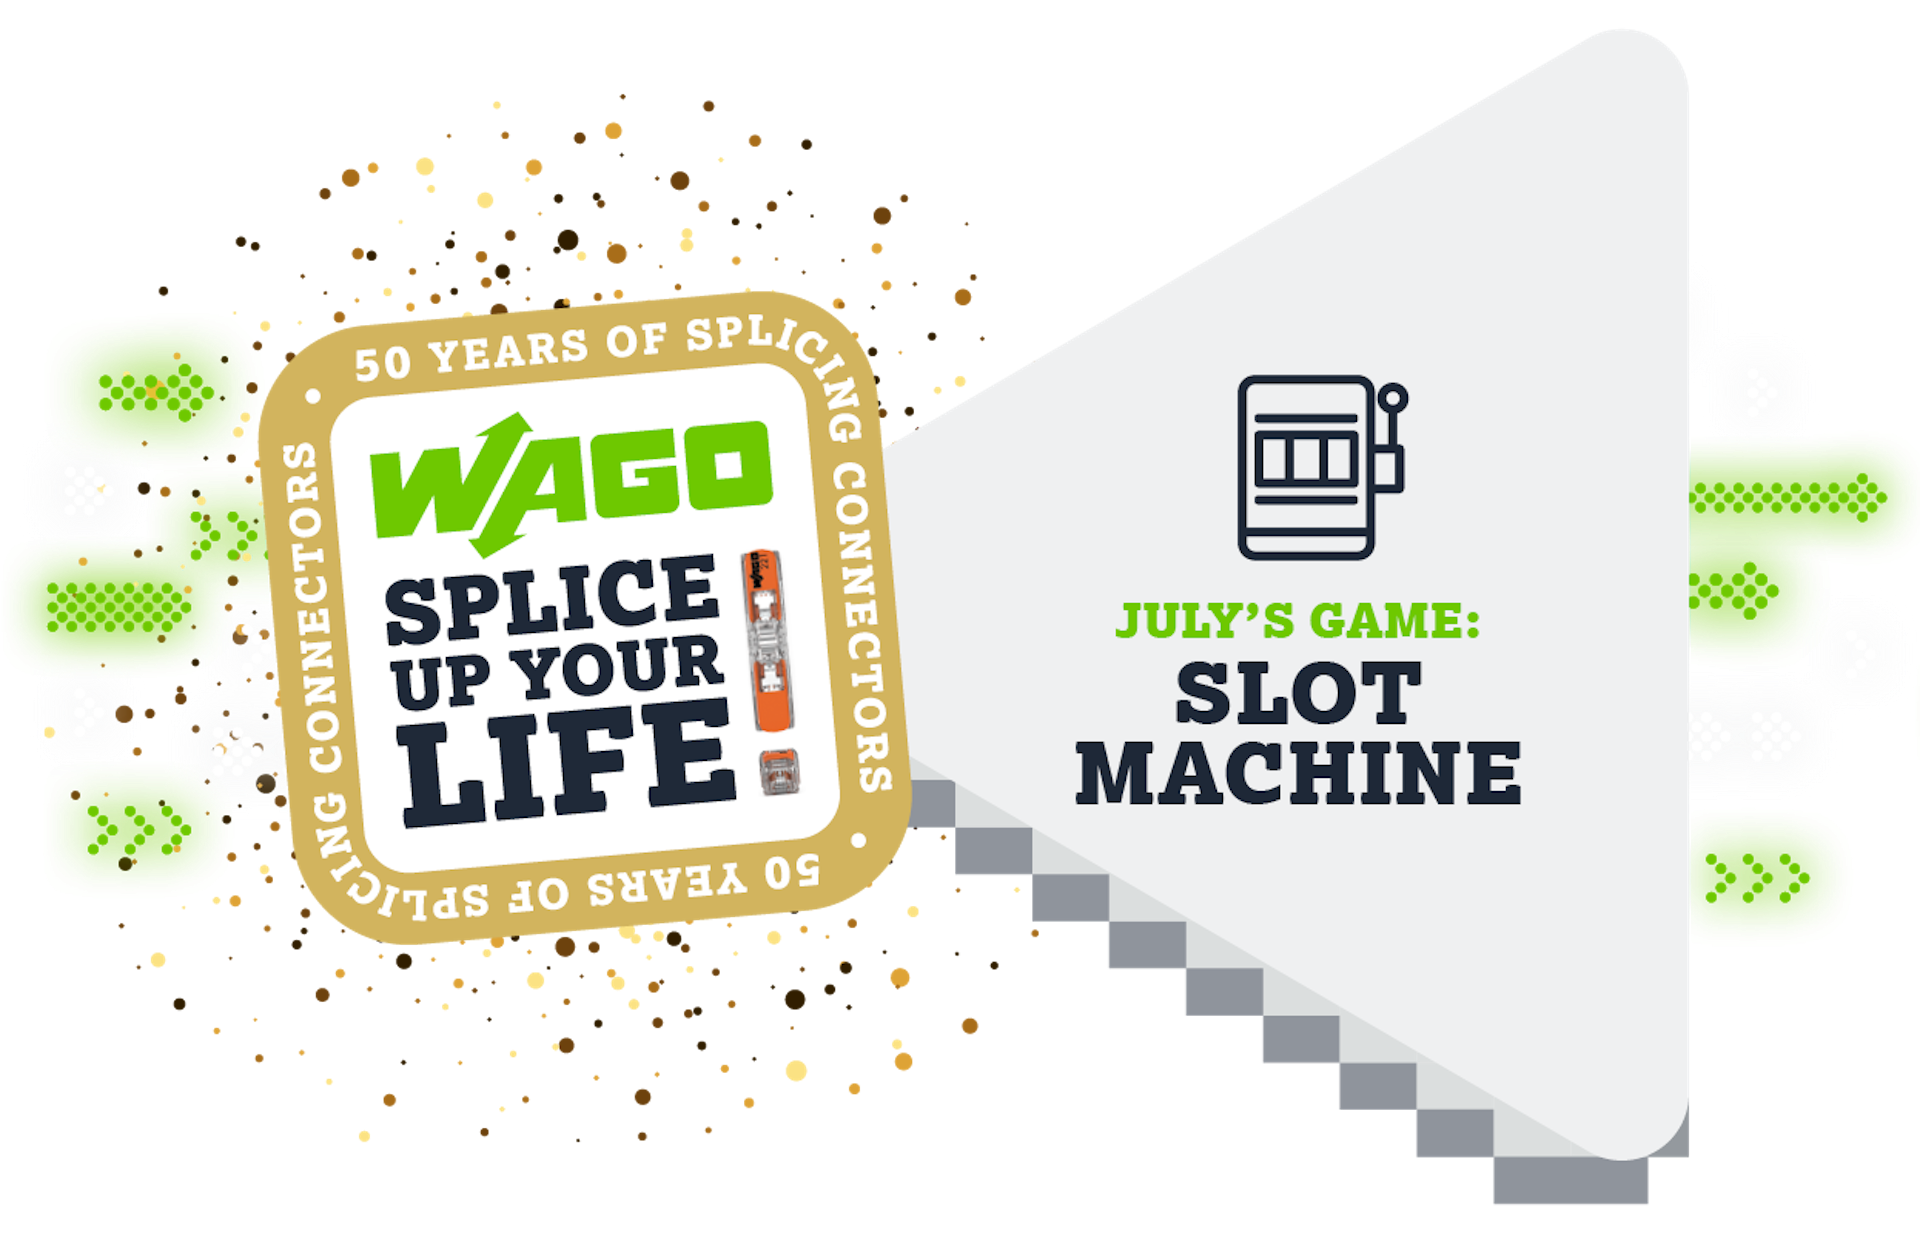 July's game: Slot Machine